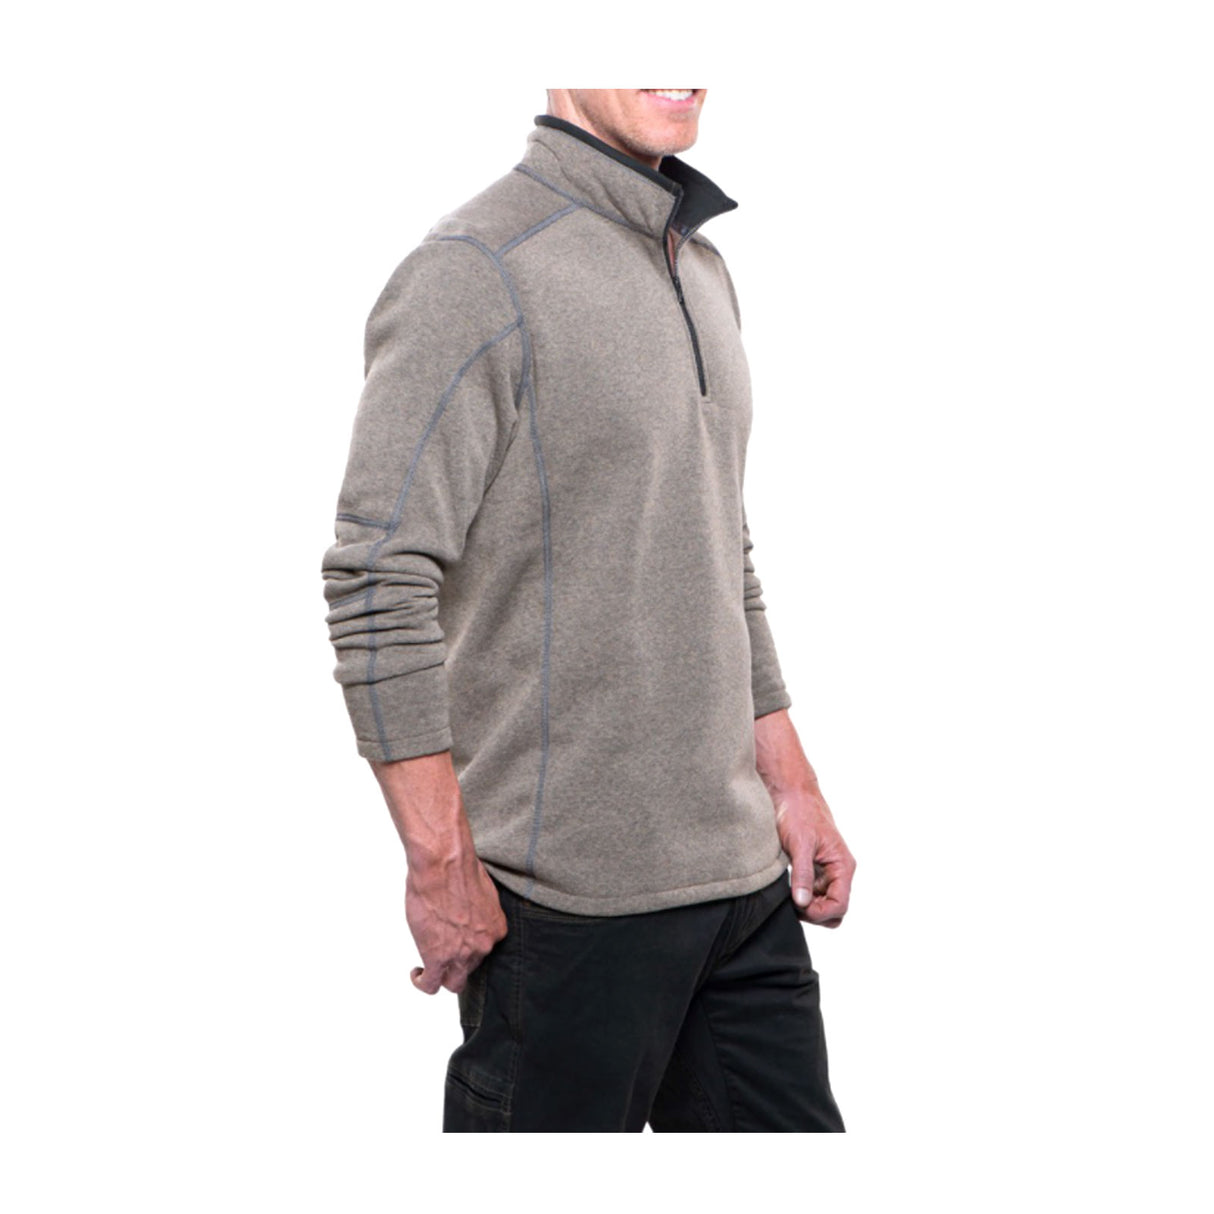 Kuhl Revel 1/4 Zip Sweater (Men) - Oatmeal Apparel - Top - Long Sleeve - The Heel Shoe Fitters